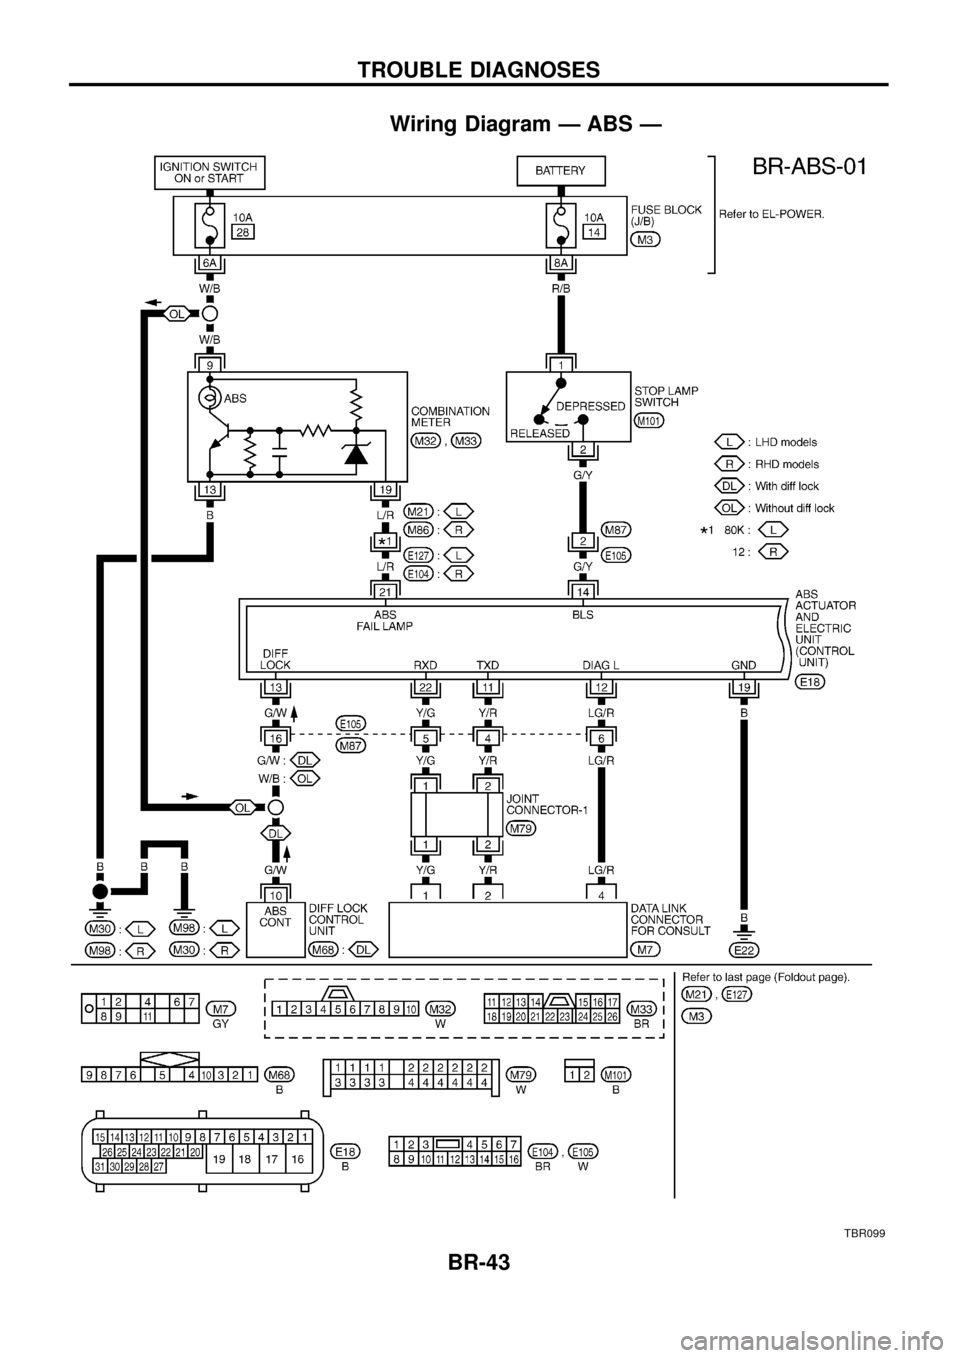 NISSAN PATROL 1998 Y61 / 5.G Brake System Workshop Manual Wiring Diagram Ð ABS Ð
TBR099
TROUBLE DIAGNOSES
BR-43 